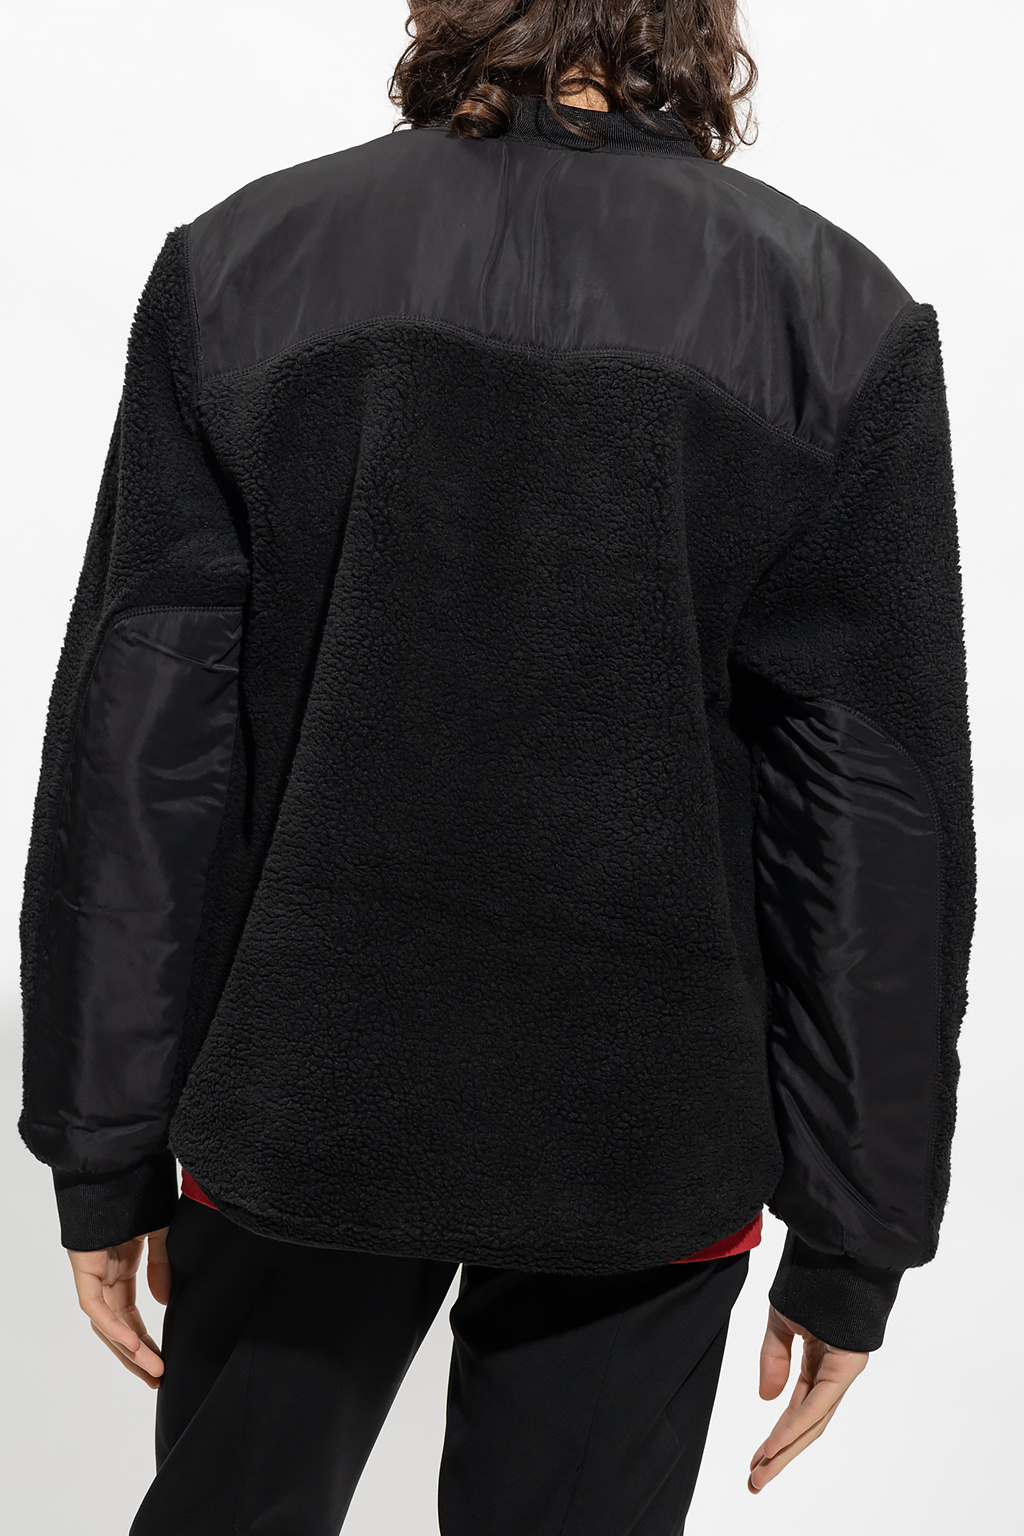 Samsøe Samsøe ‘Rasmus’ fleece Edition jacket